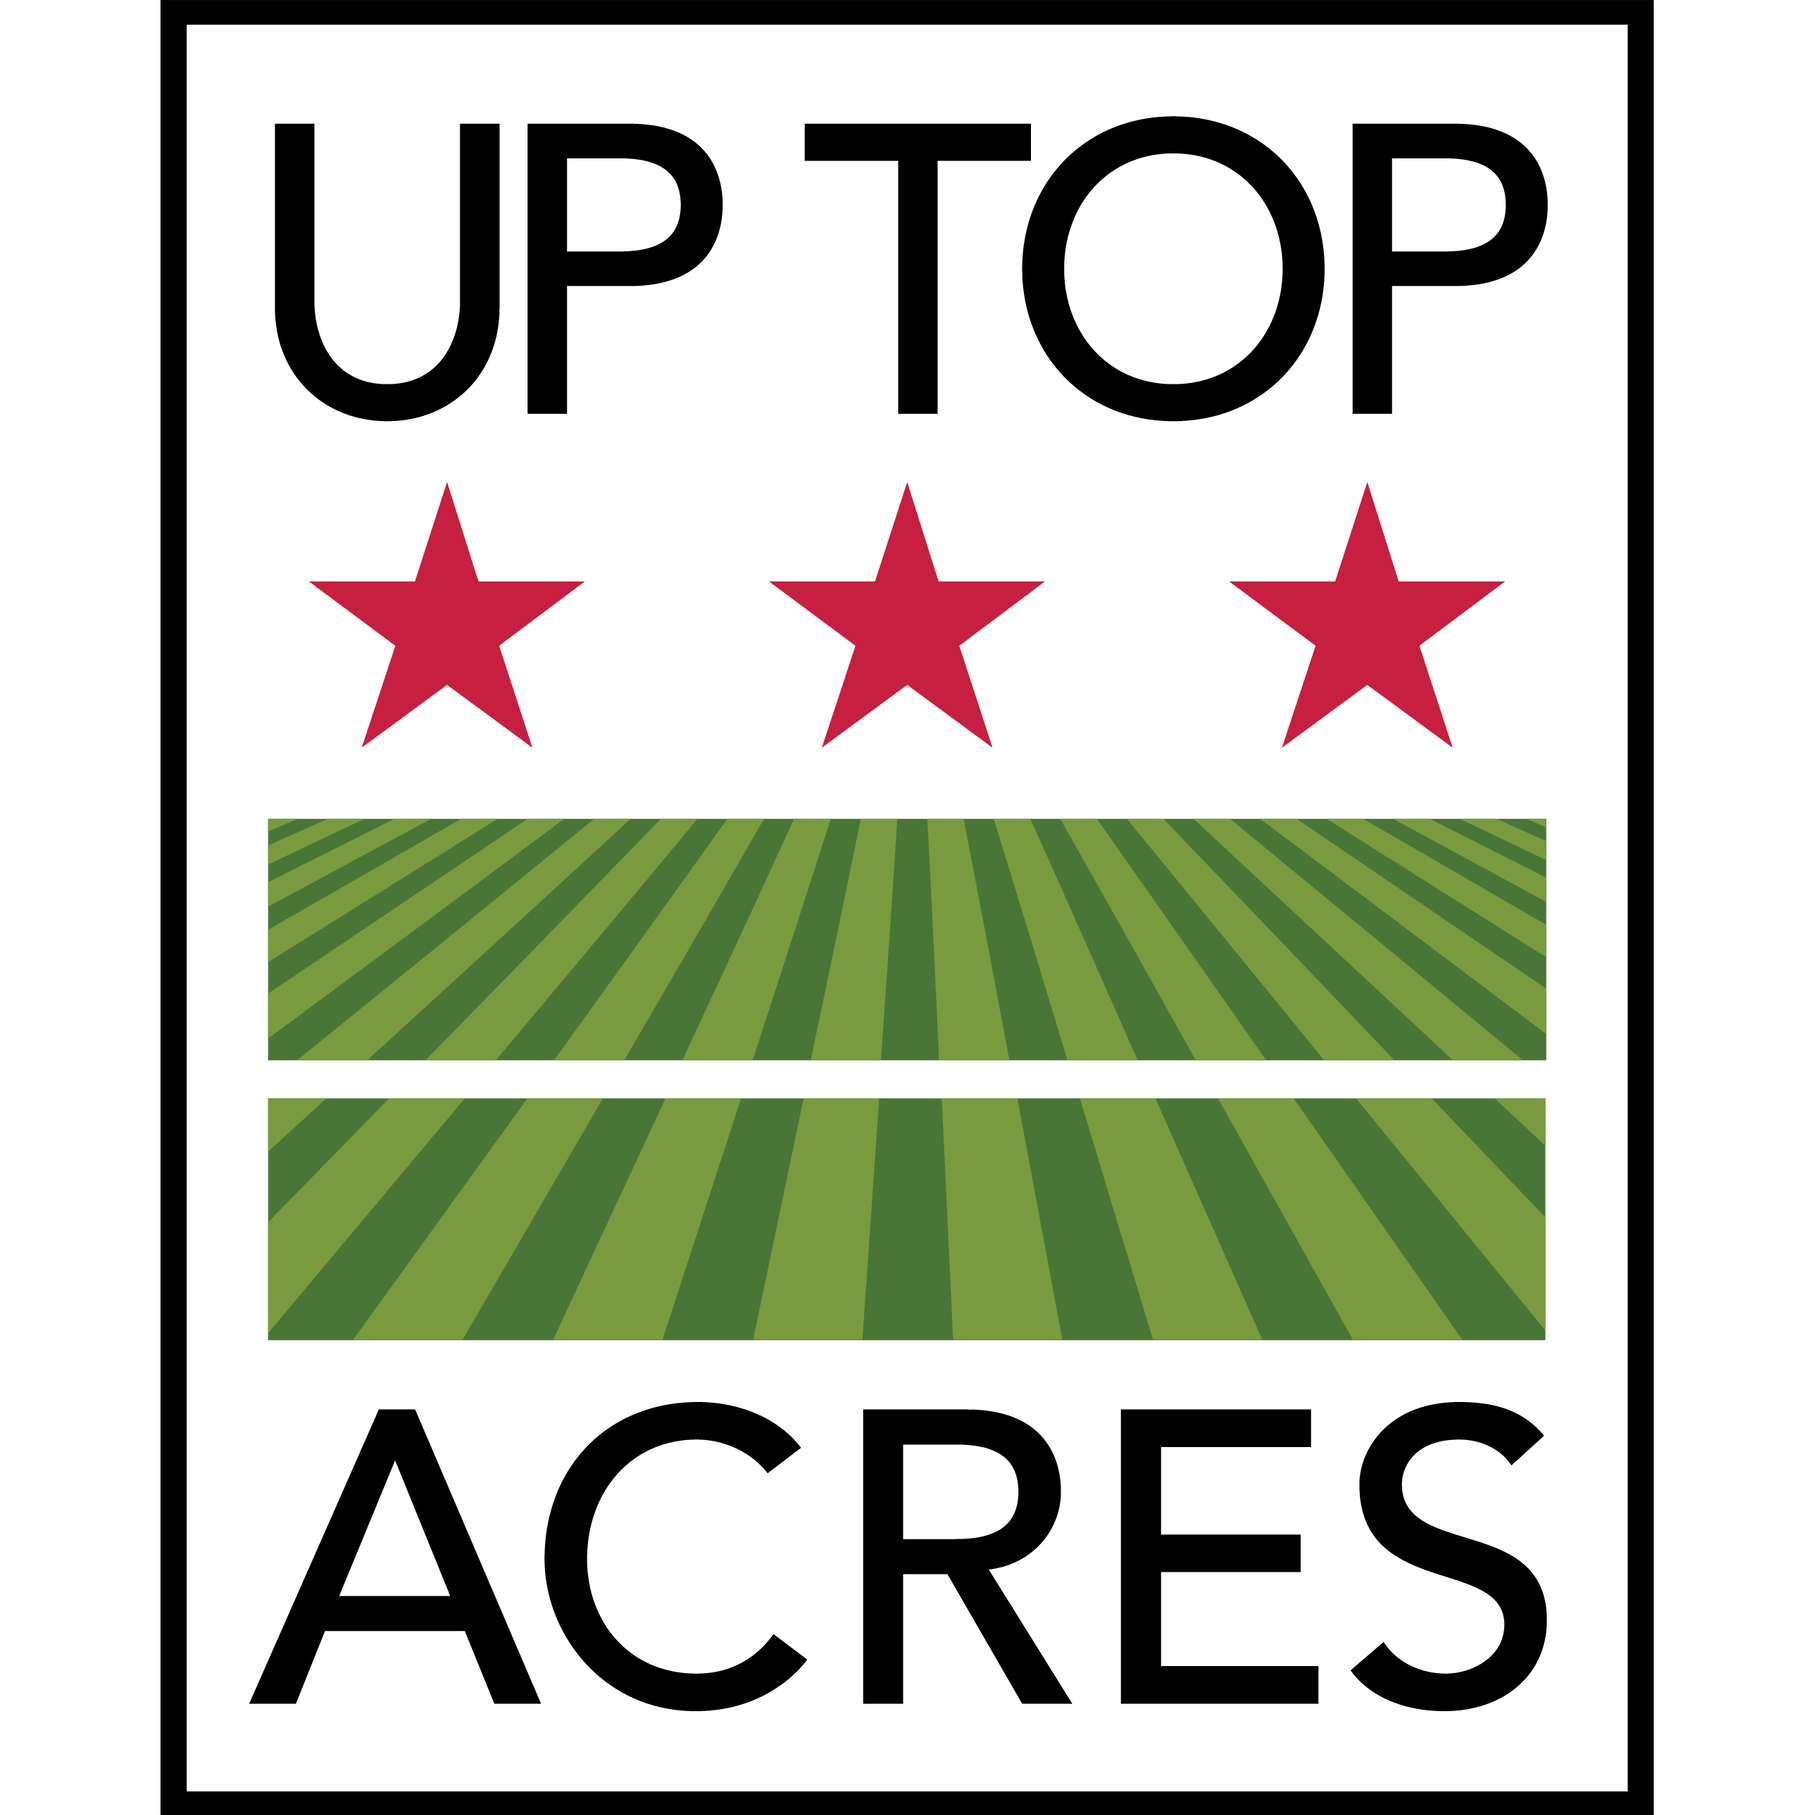 Uptop Acres Farm